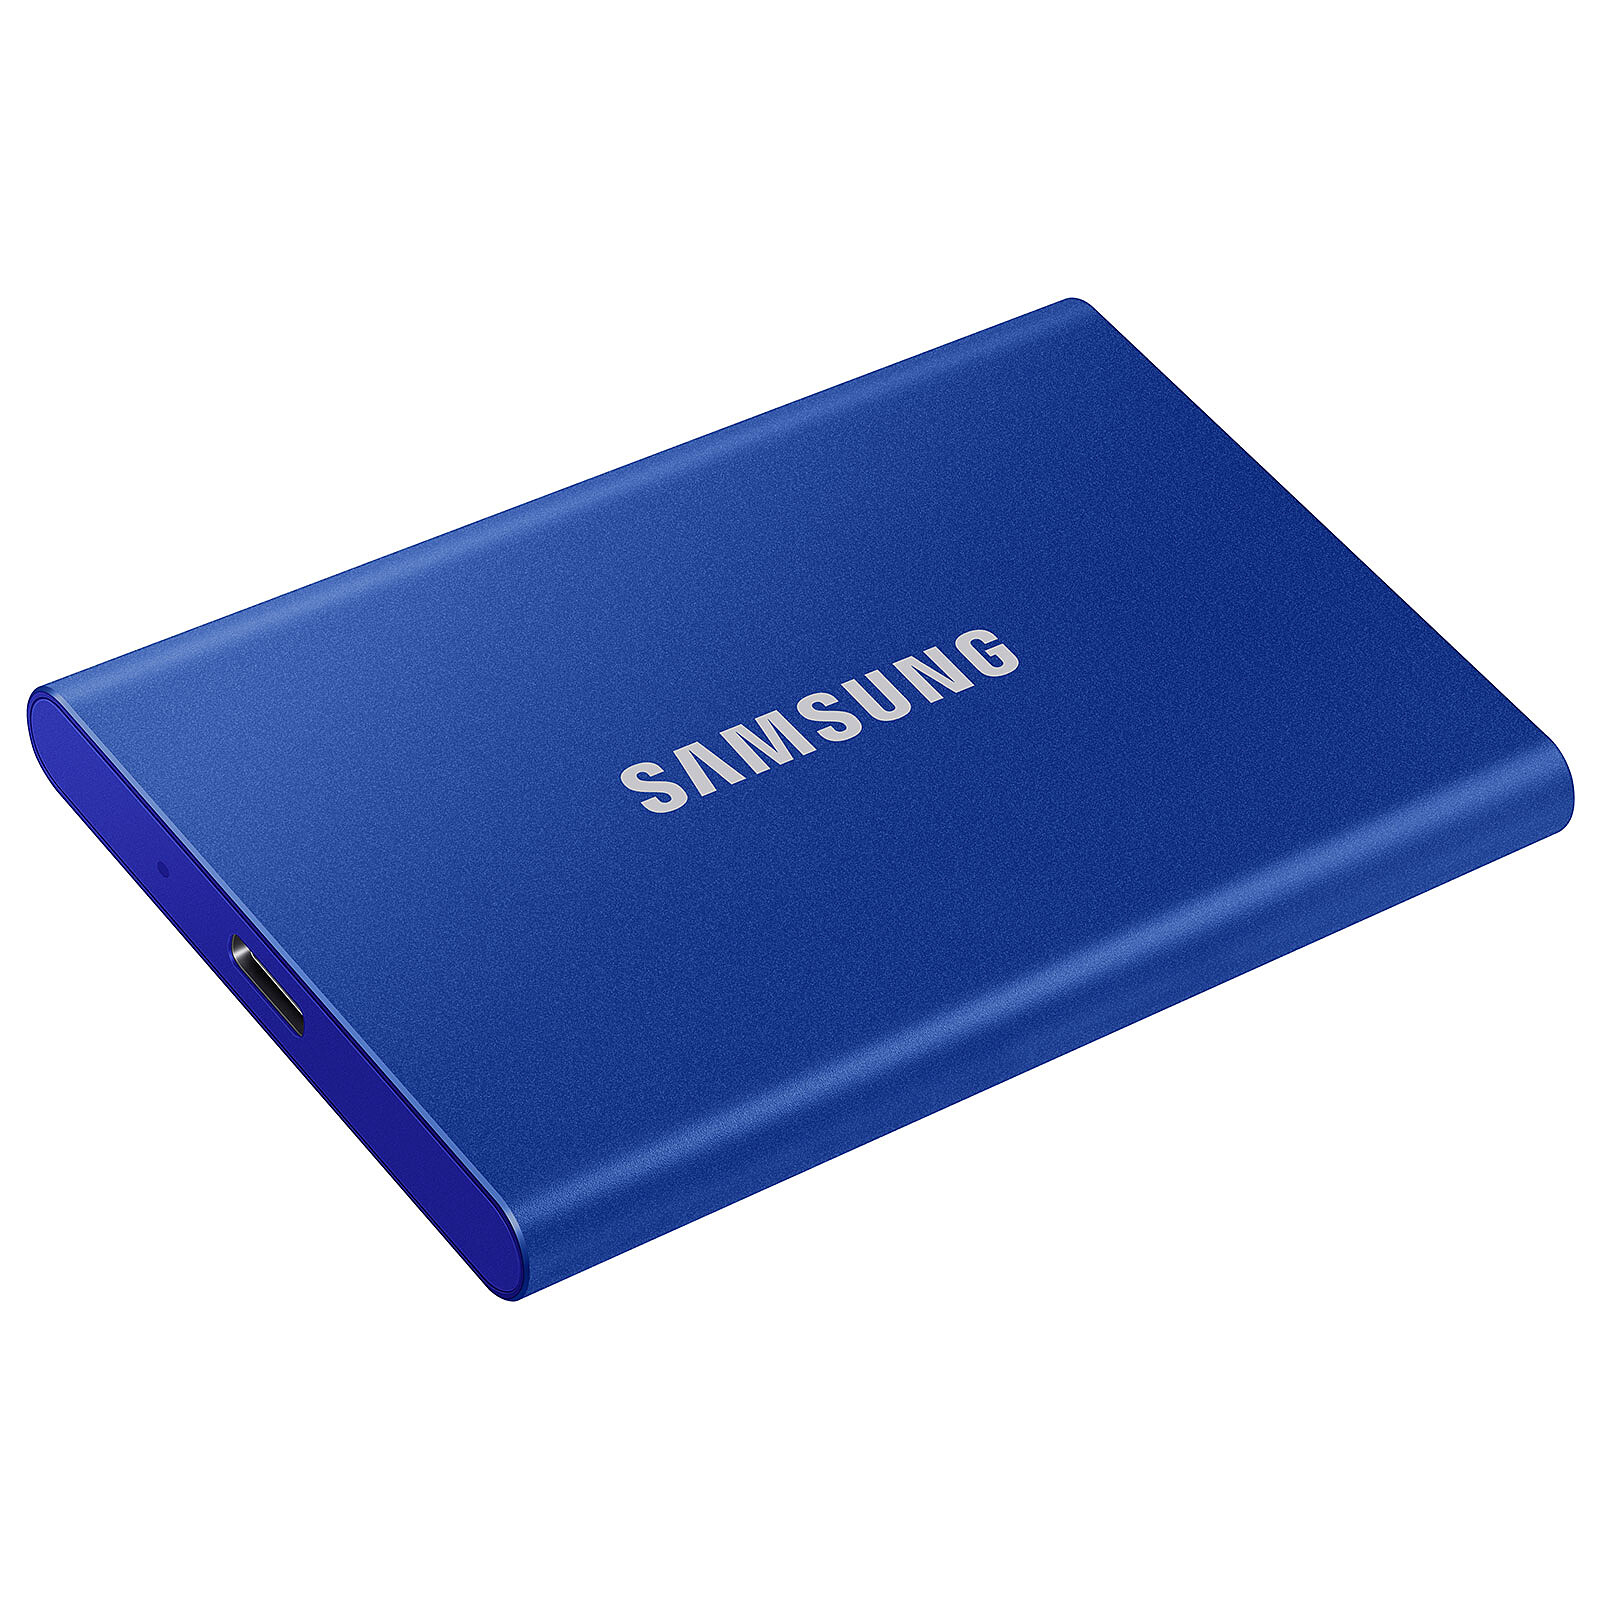 Disque dur ssd externe portable 2to t7 shield bleu Samsung